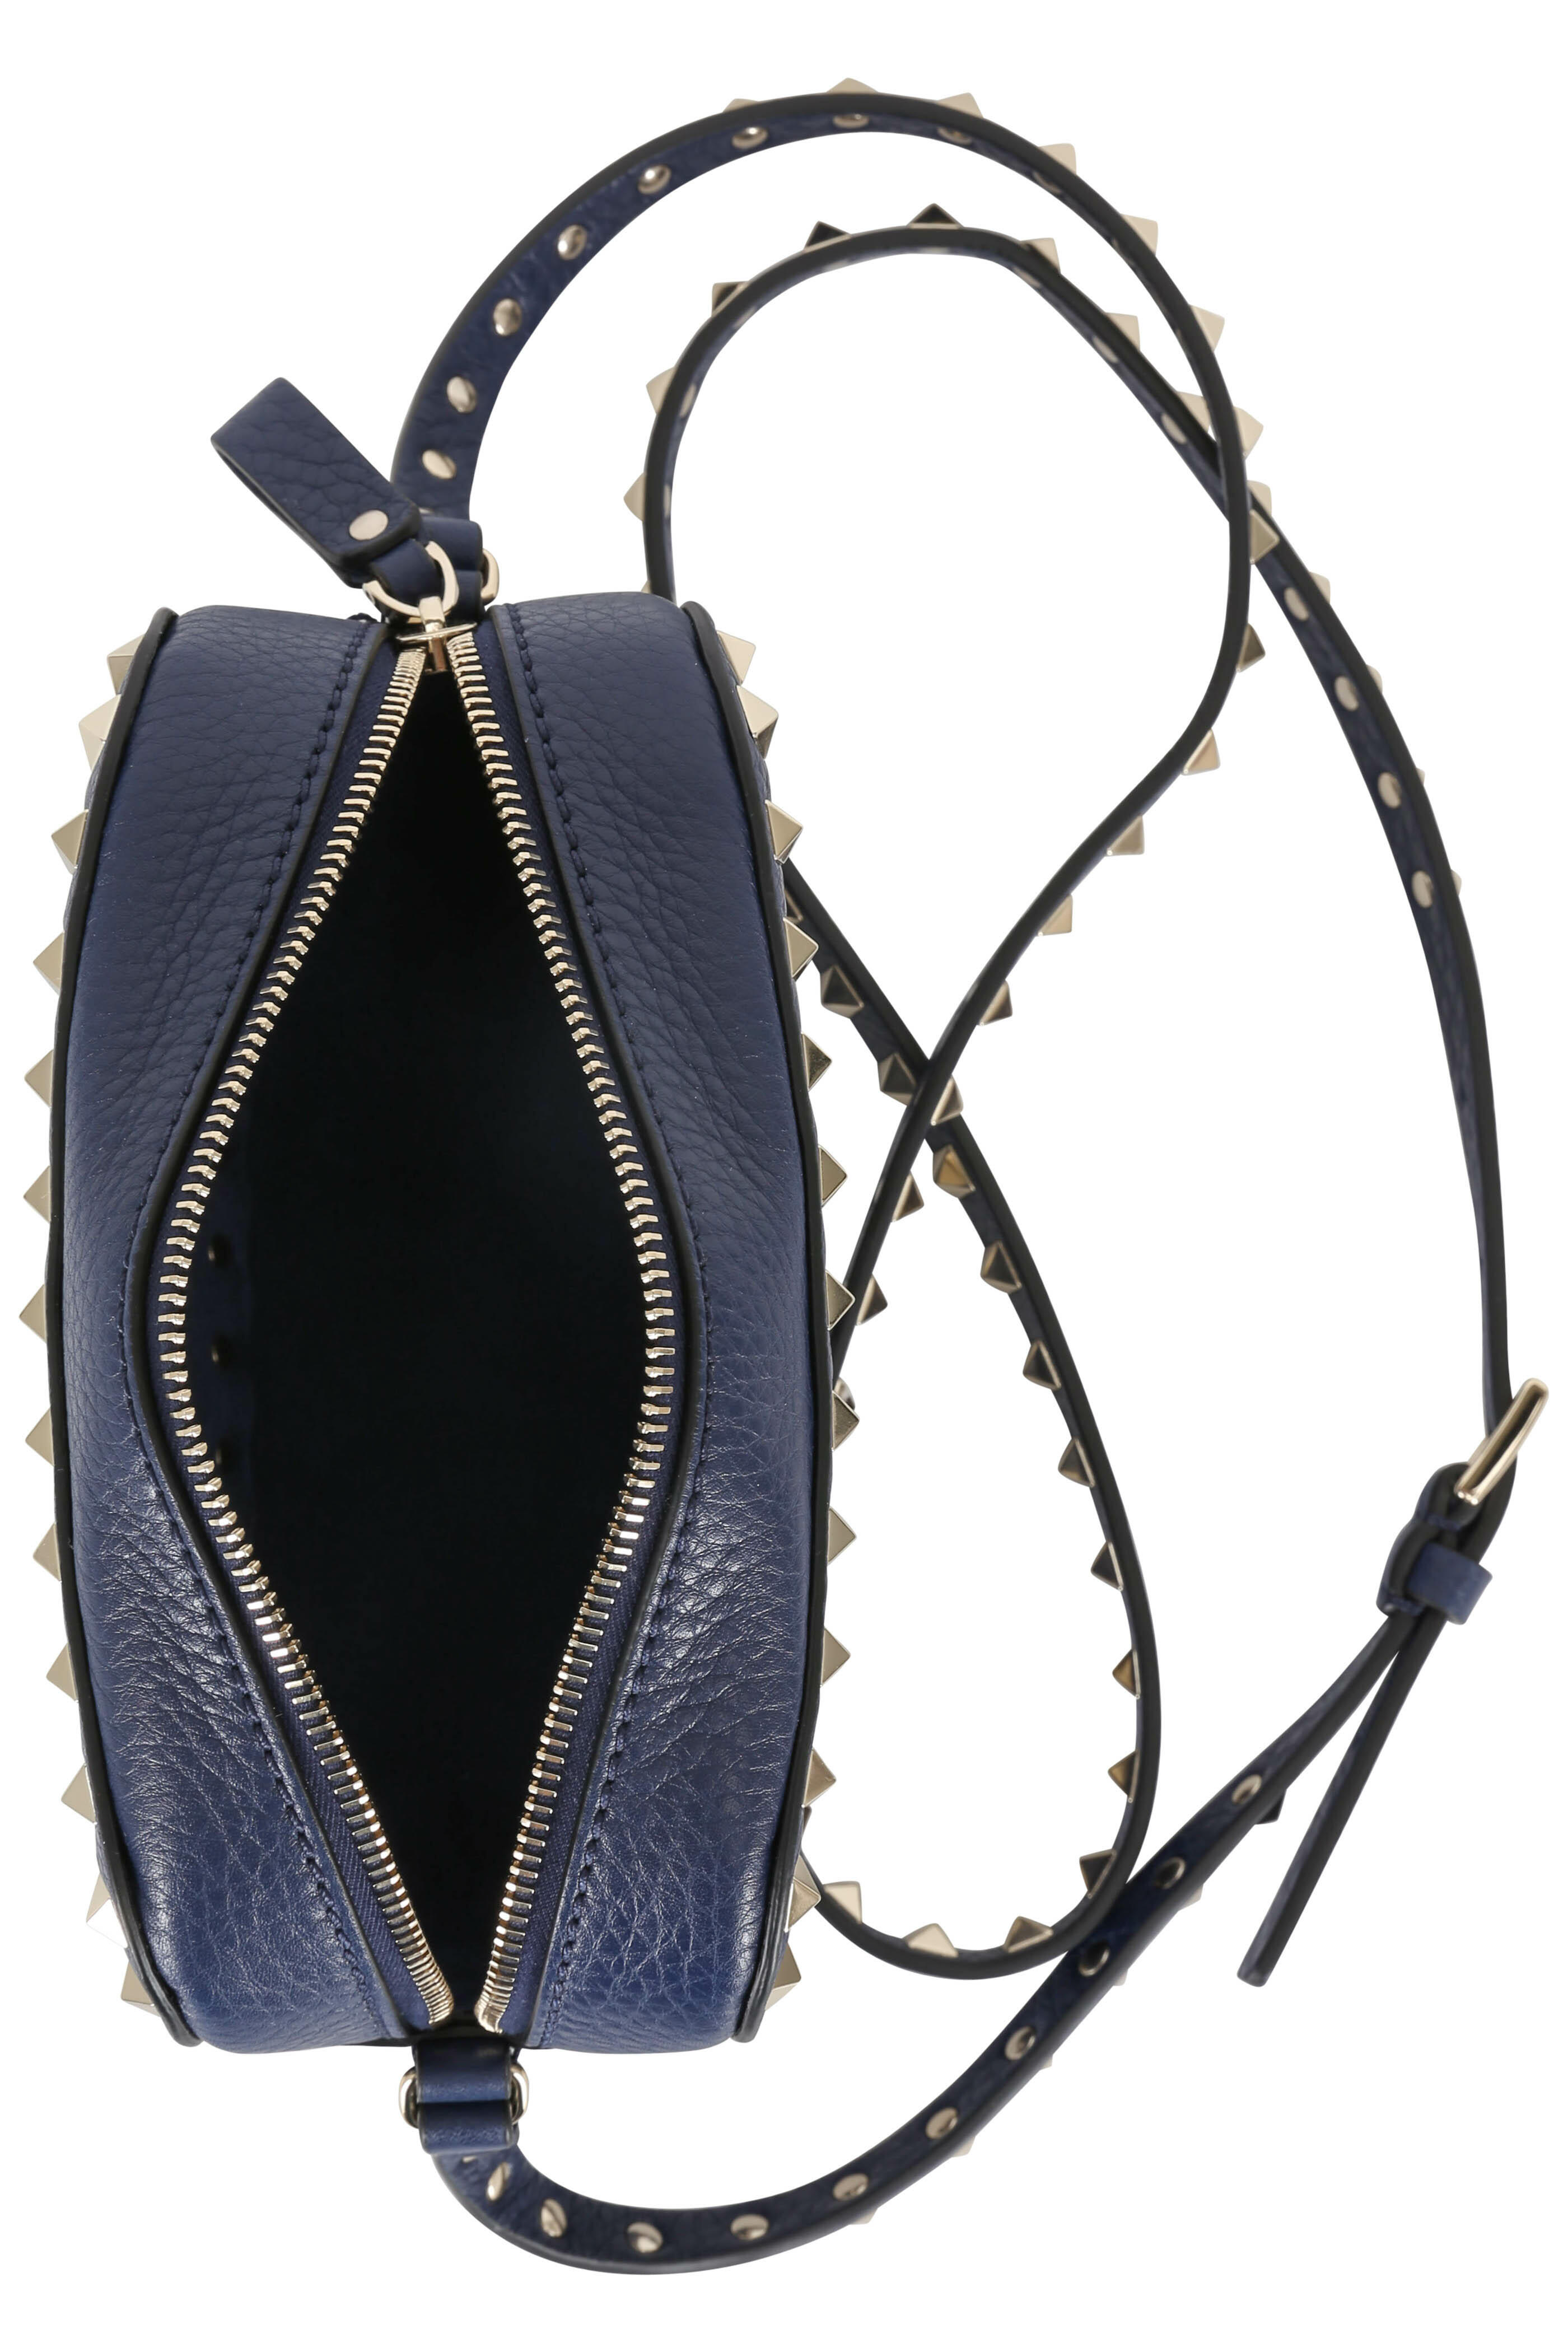 Rockstud leather crossbody bag Valentino Garavani Blue in Leather - 28325498